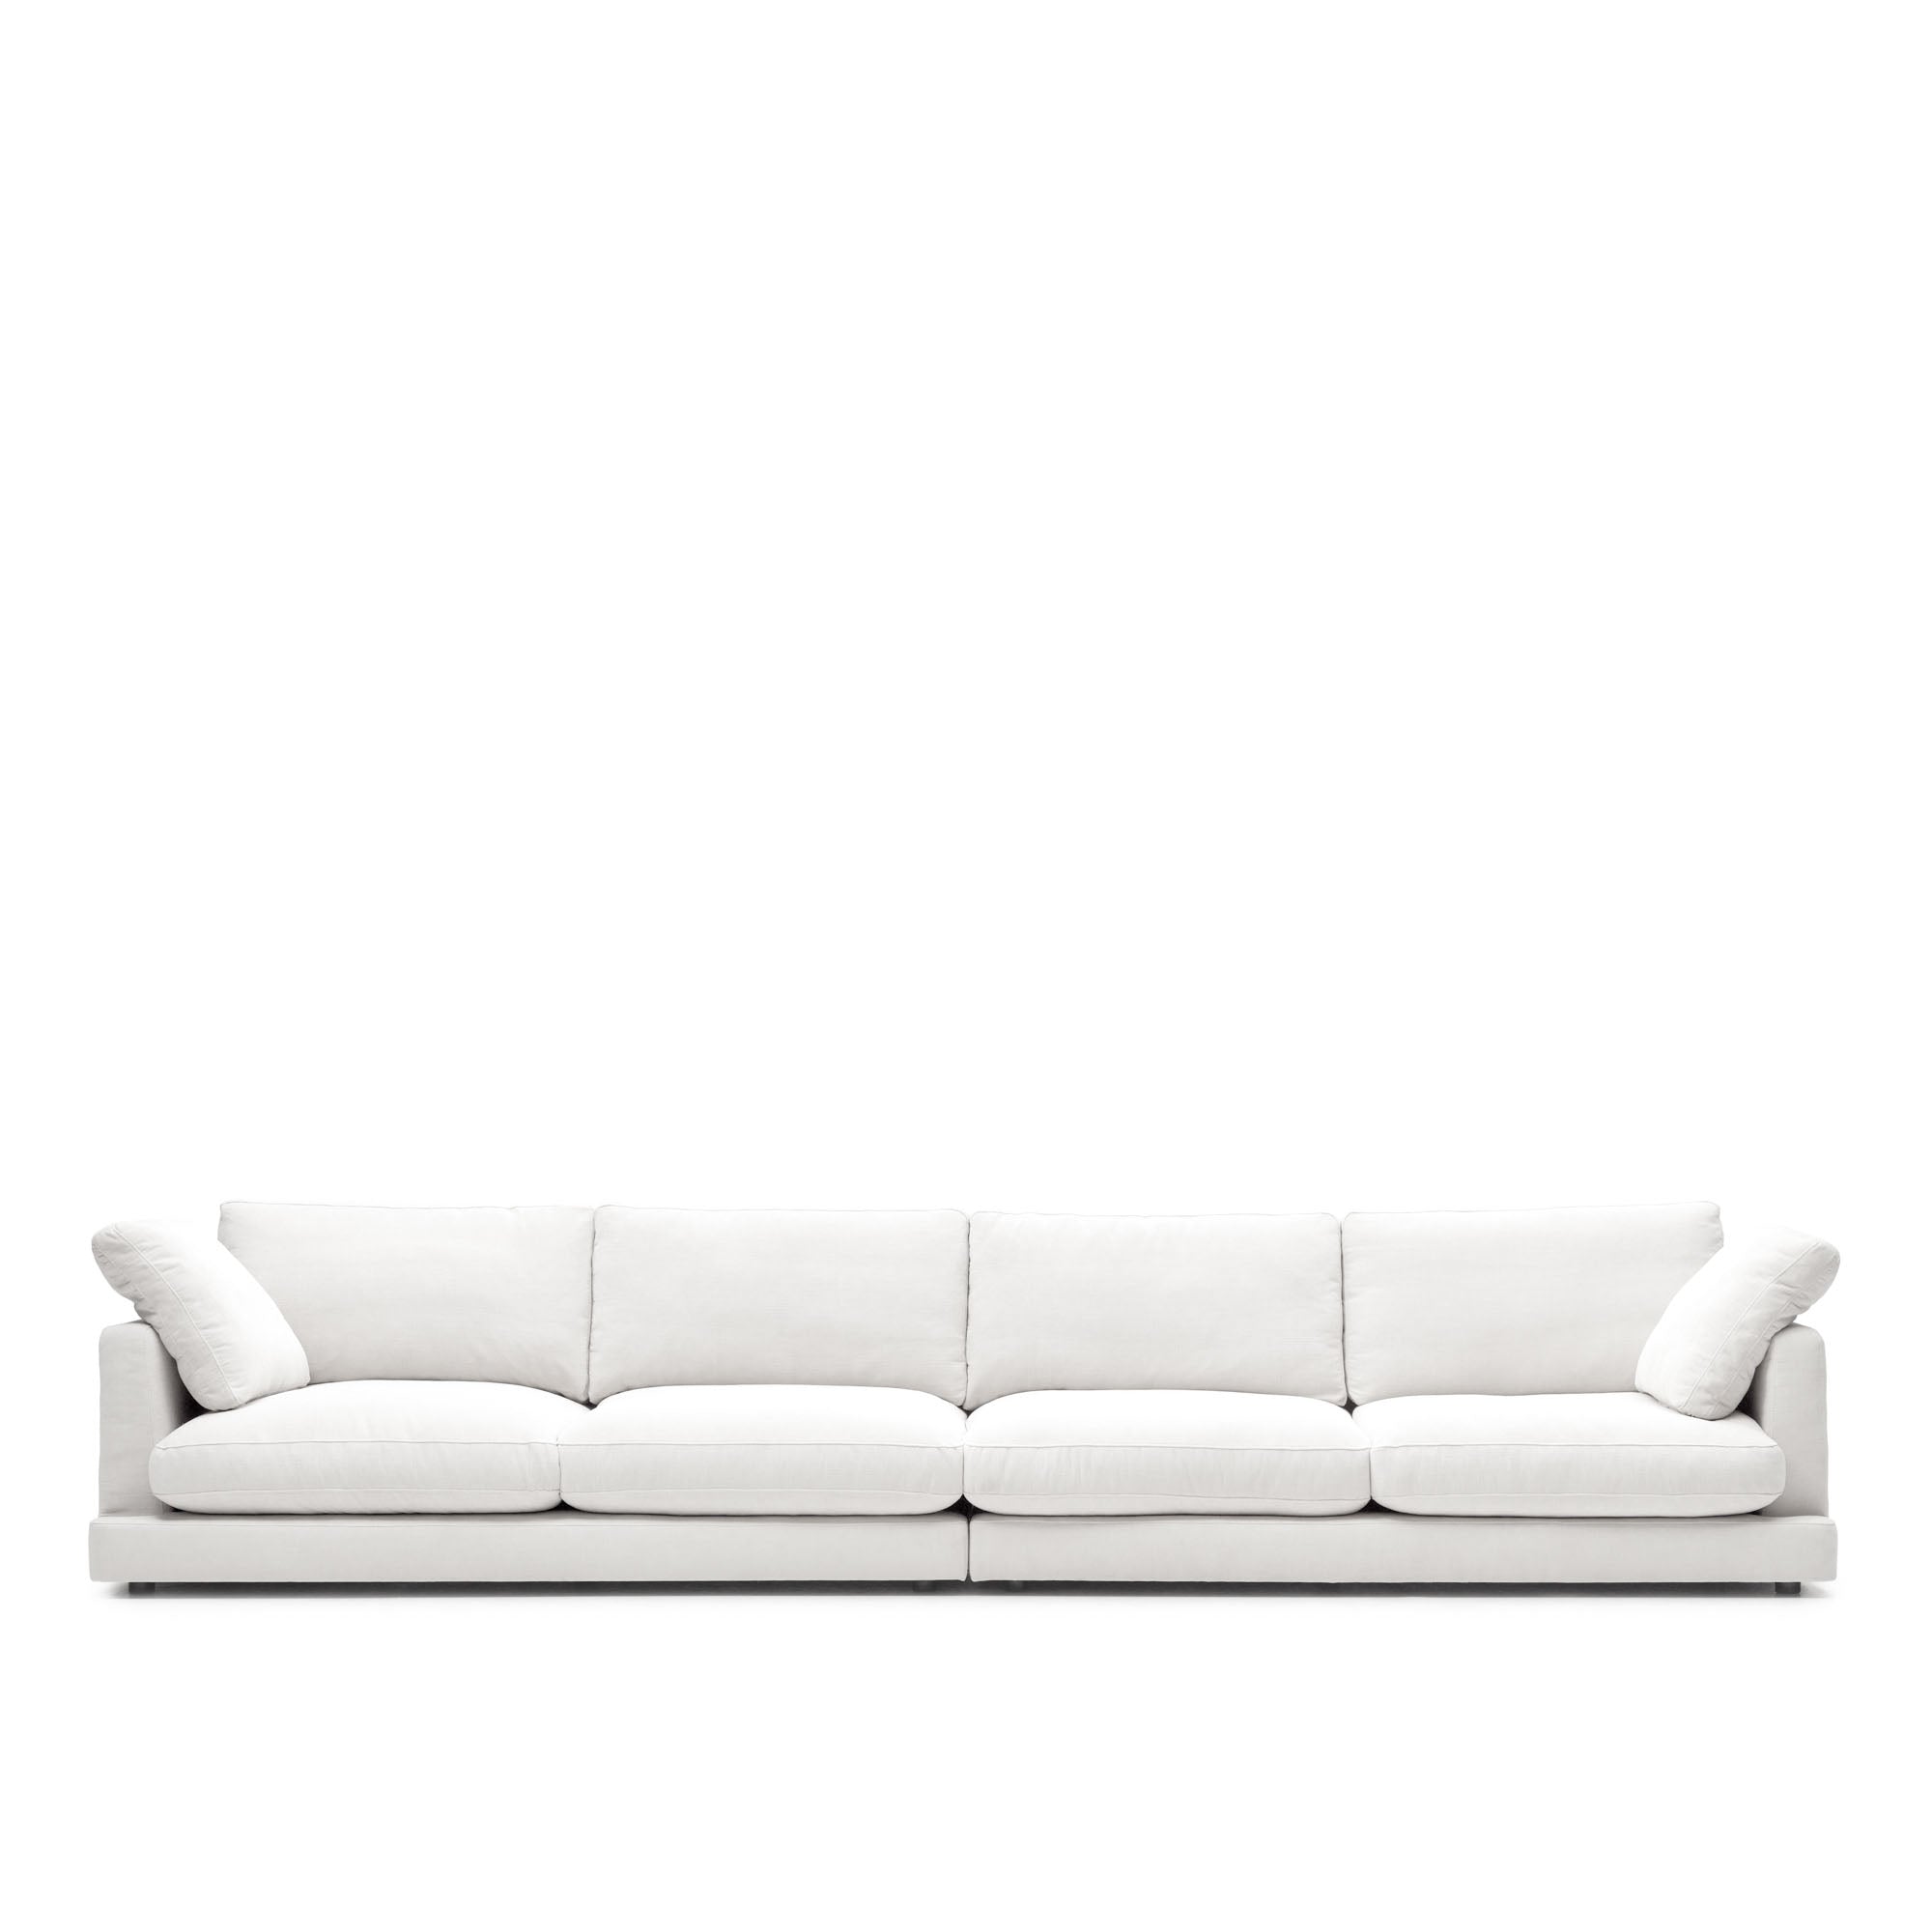 Gala 6 seater sofa in white, 390 cm